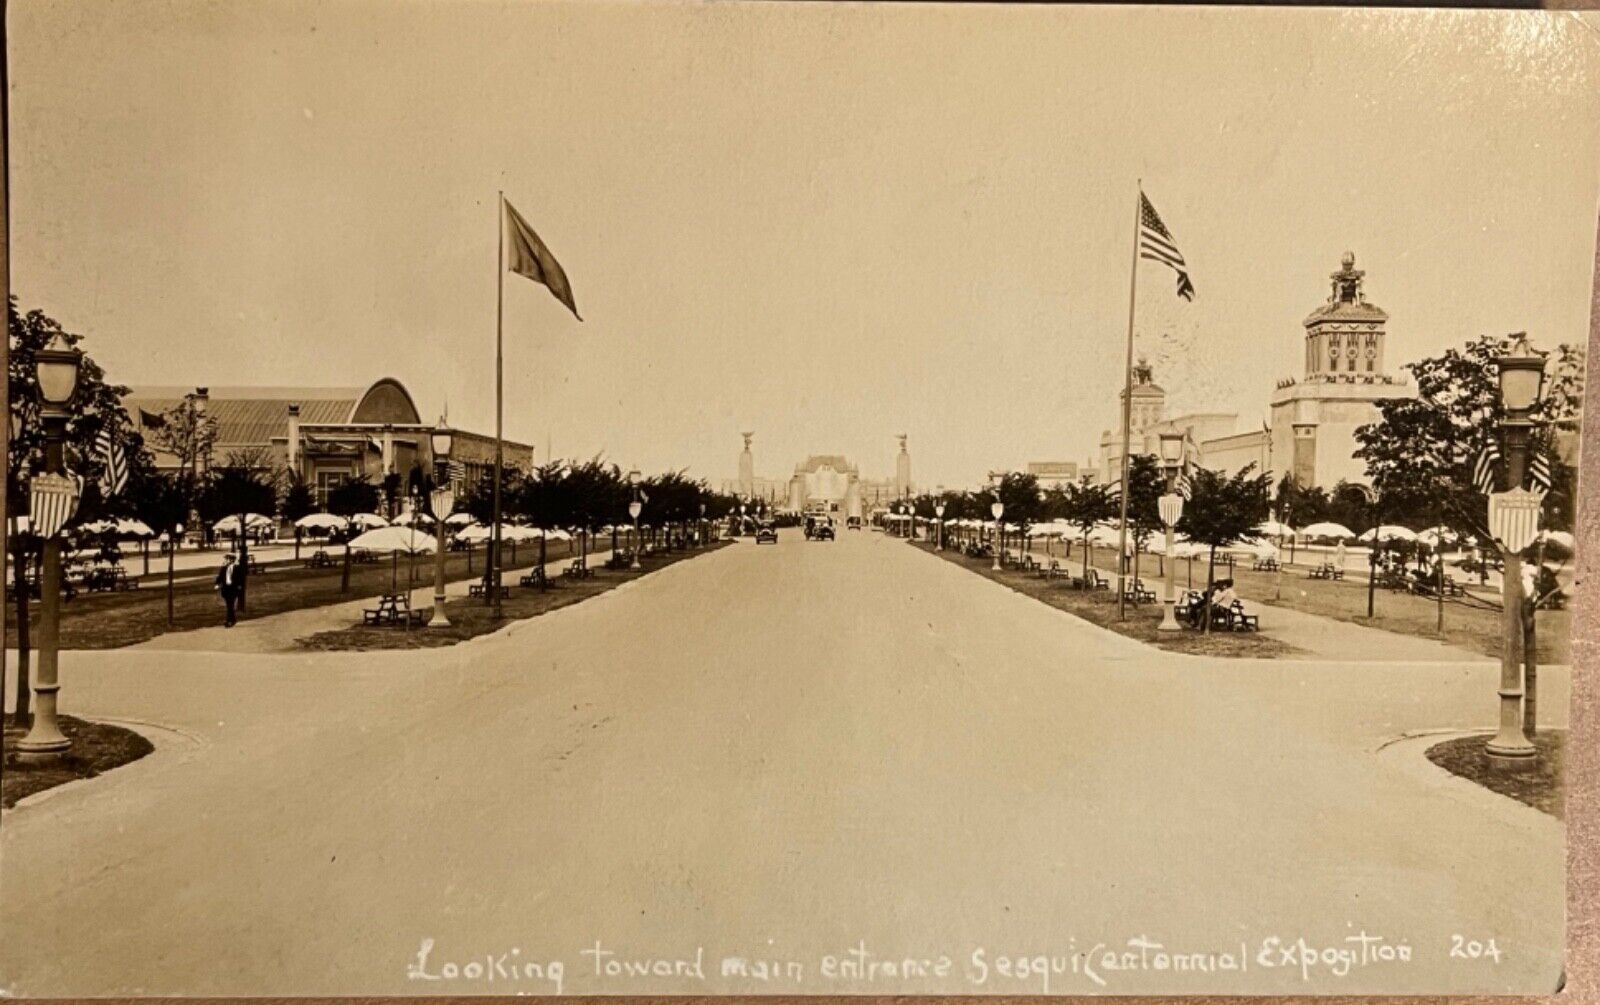 Philadelphia Sesqui-Centennial International Exposition of 1926 Entrance Photo